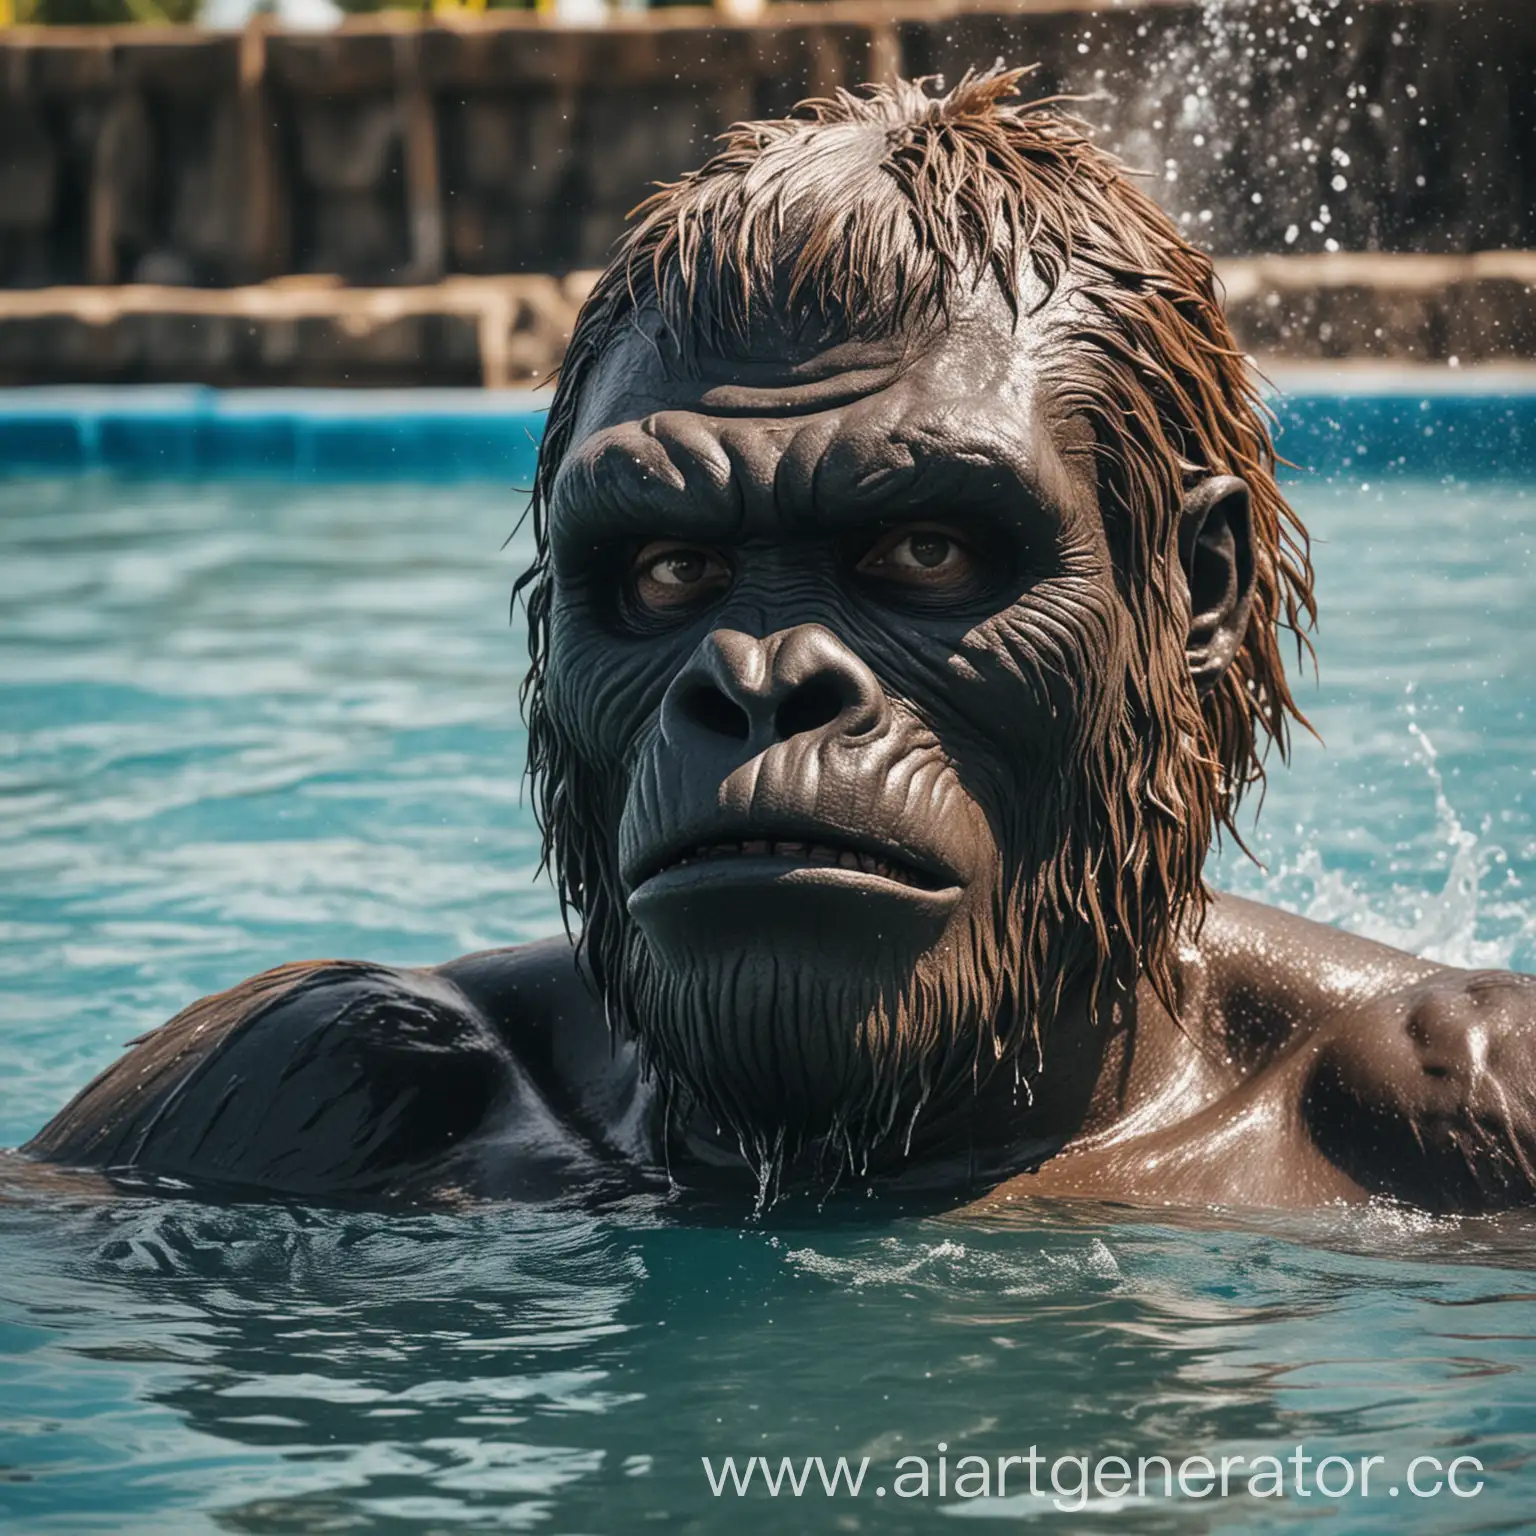 Man-in-Gorilla-Mask-at-Water-Park-Splash-Zone